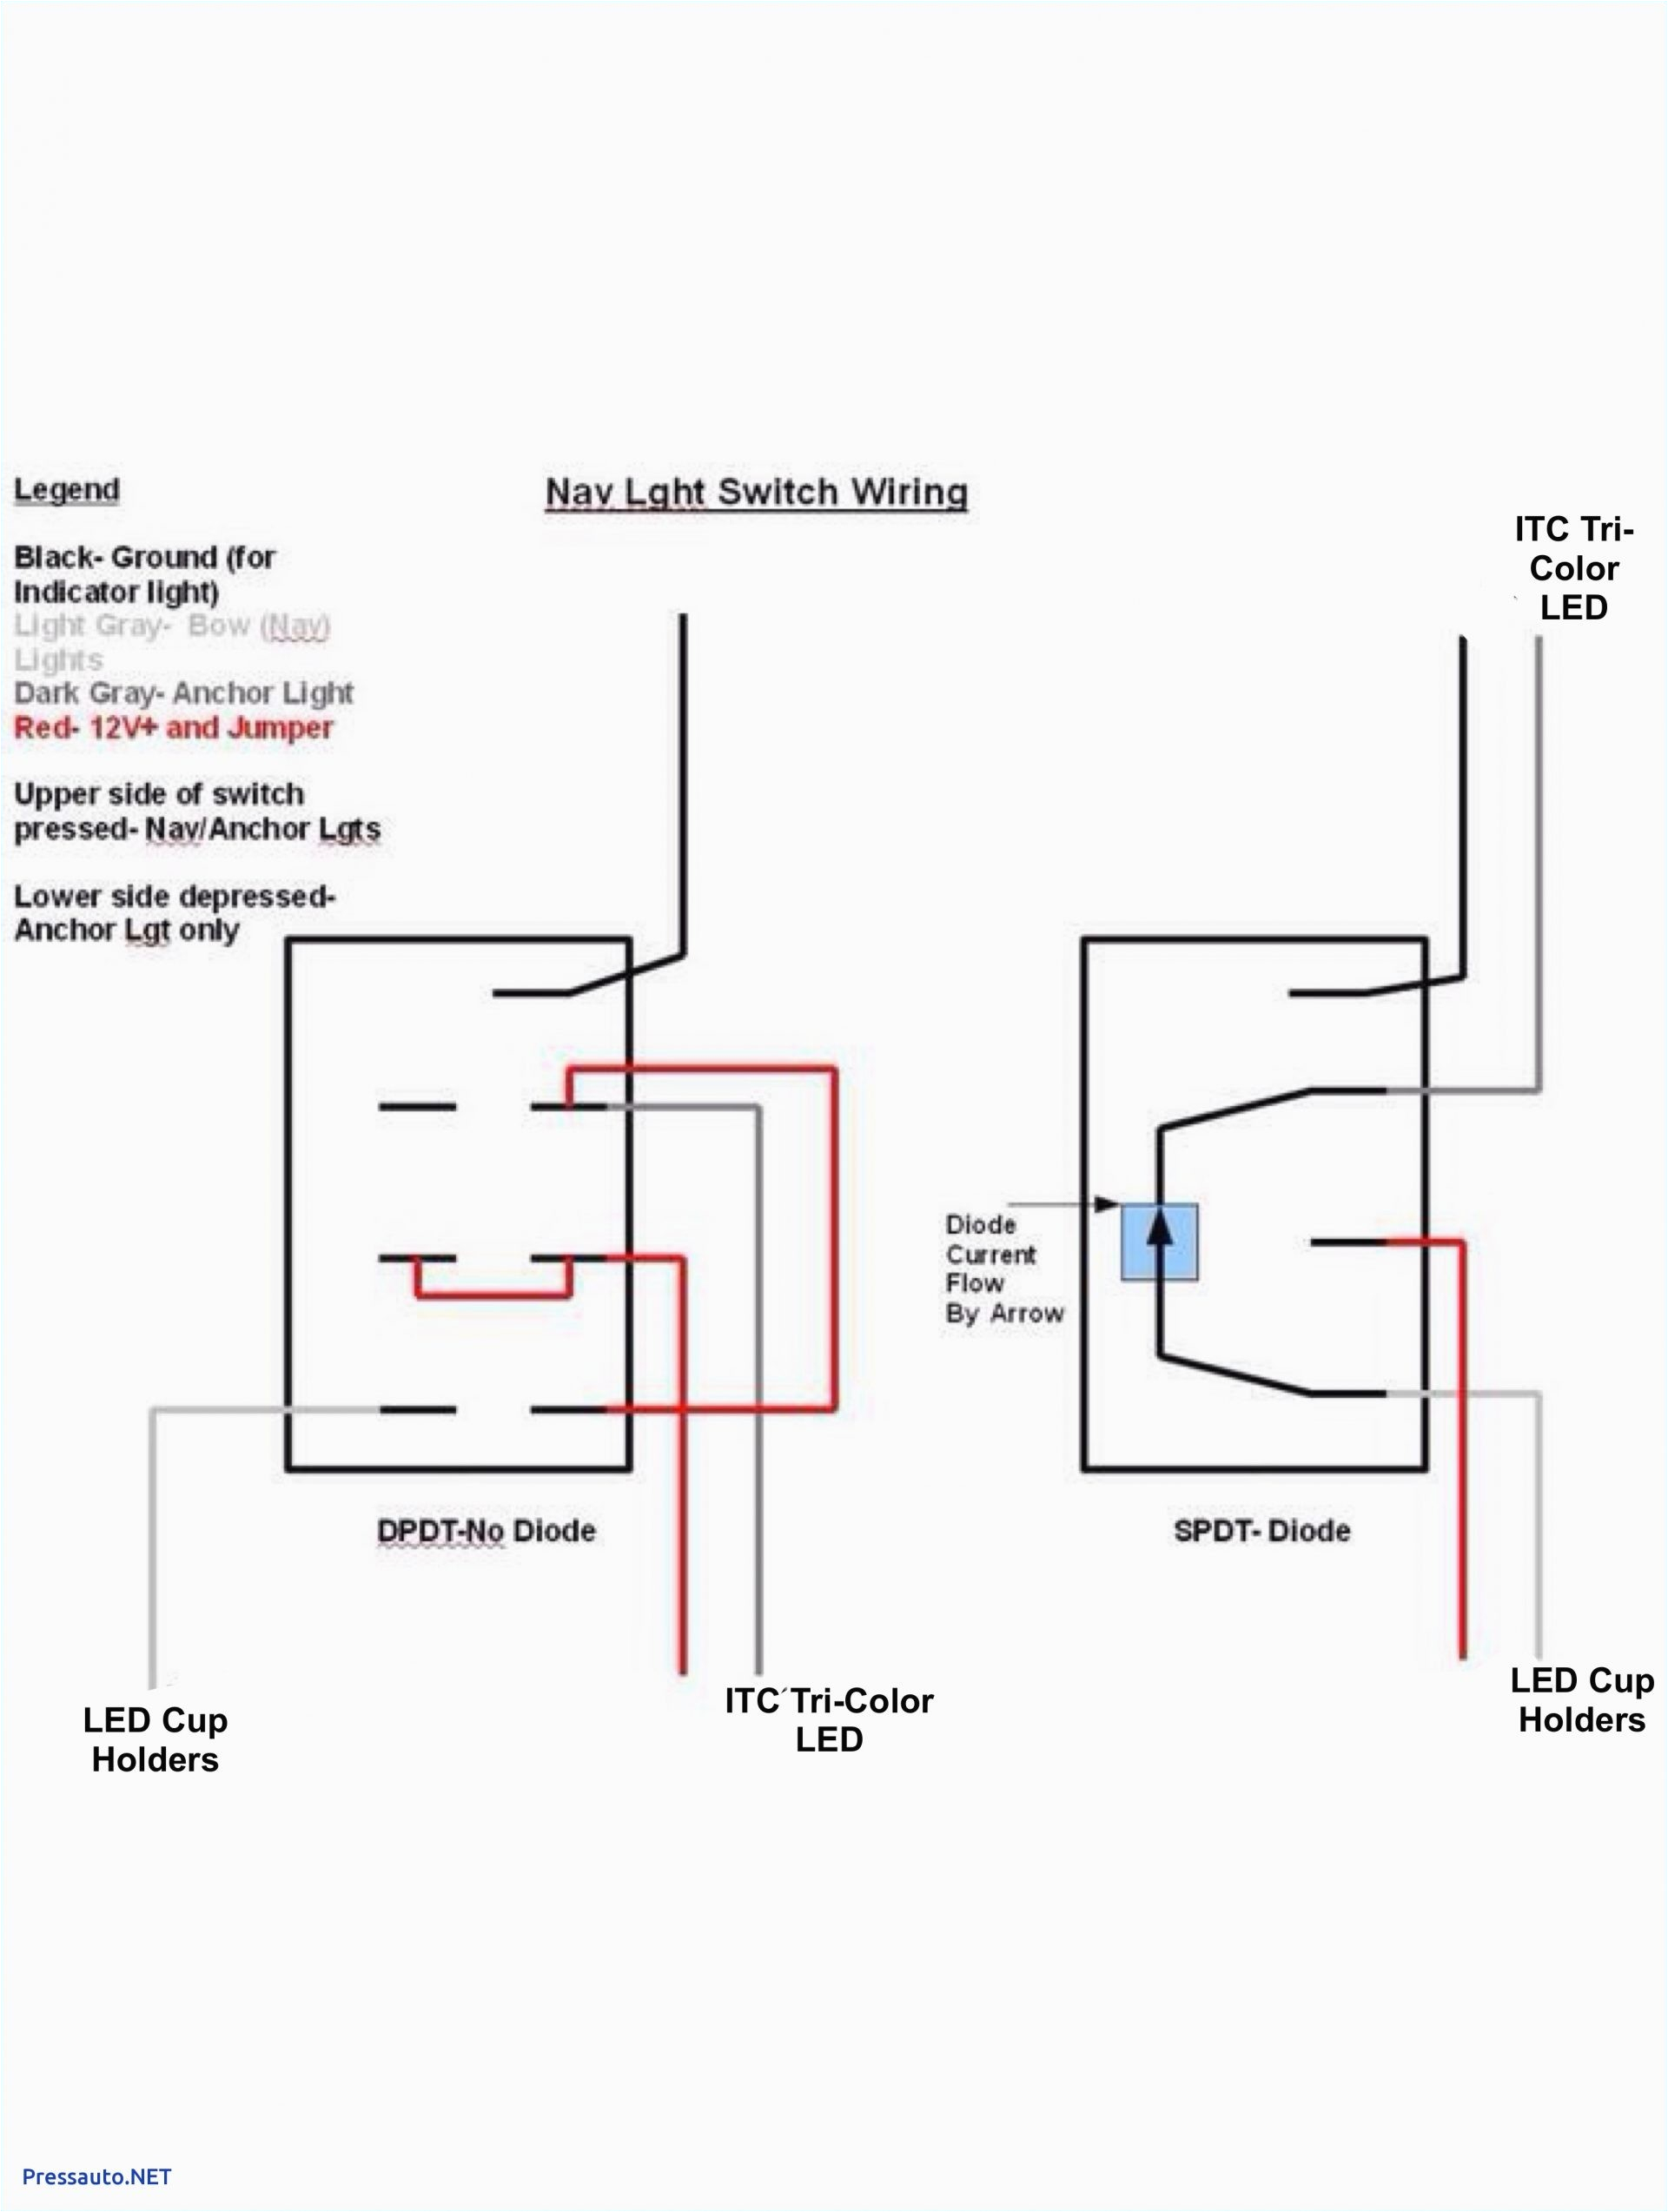 generic wiring diagram wiring diagram info generic car wiring diagram 3 way switch wiring diagram generic